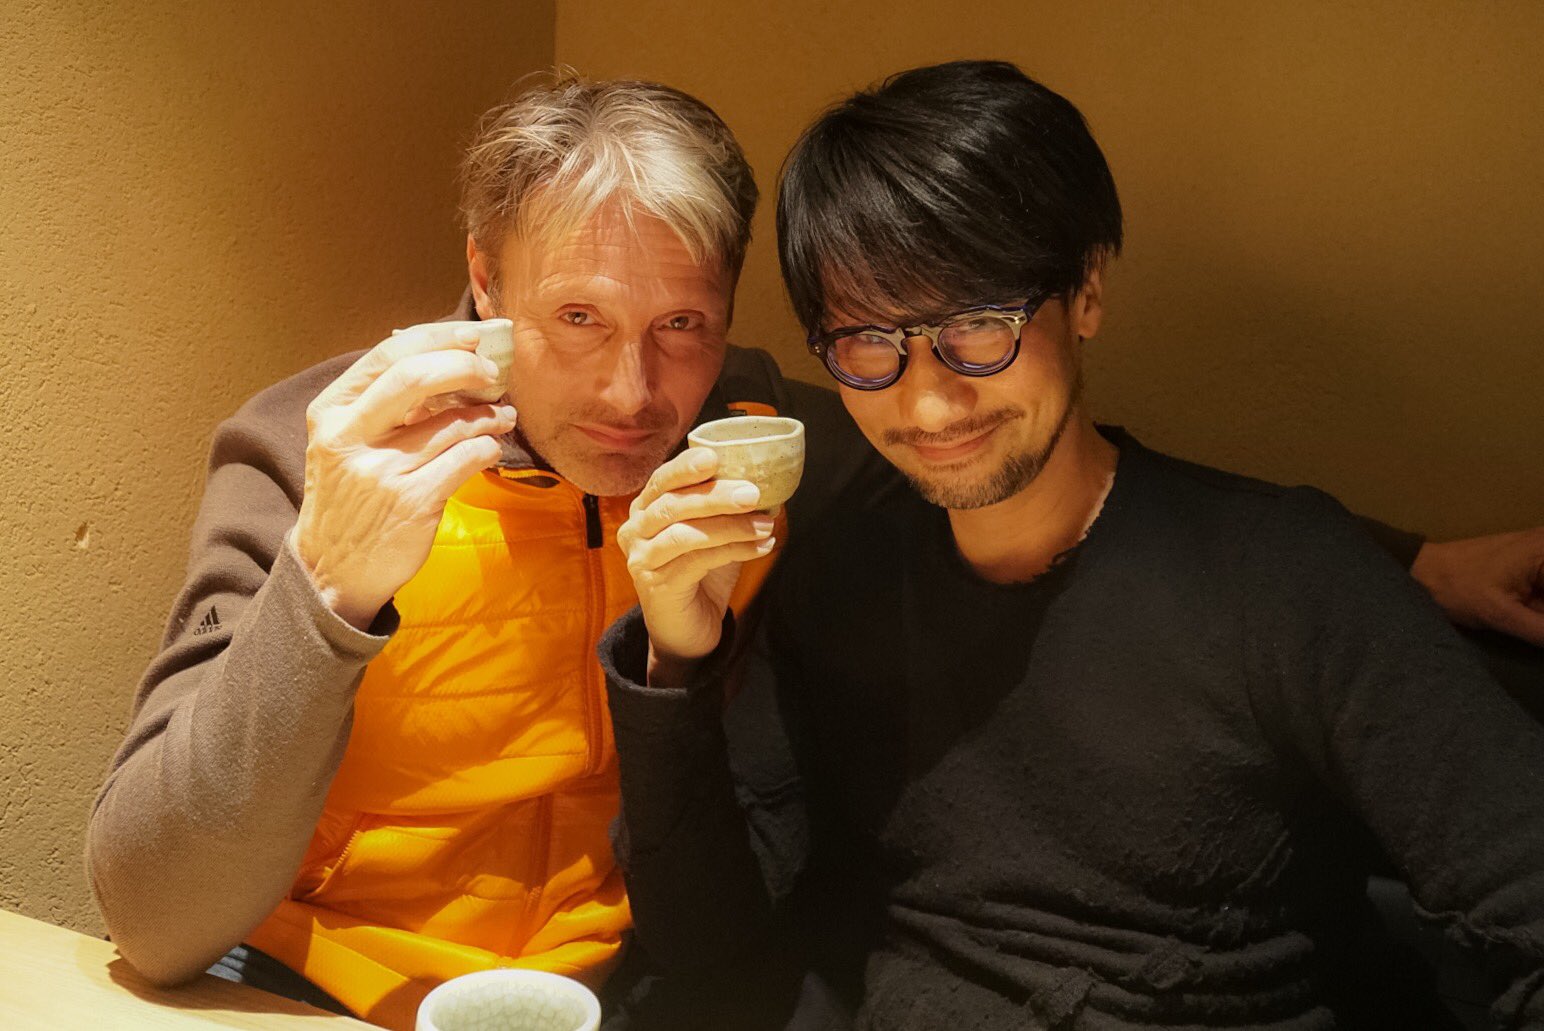 Mads Mikkelsen et Hideo Kojima, le 25 janvier 2017